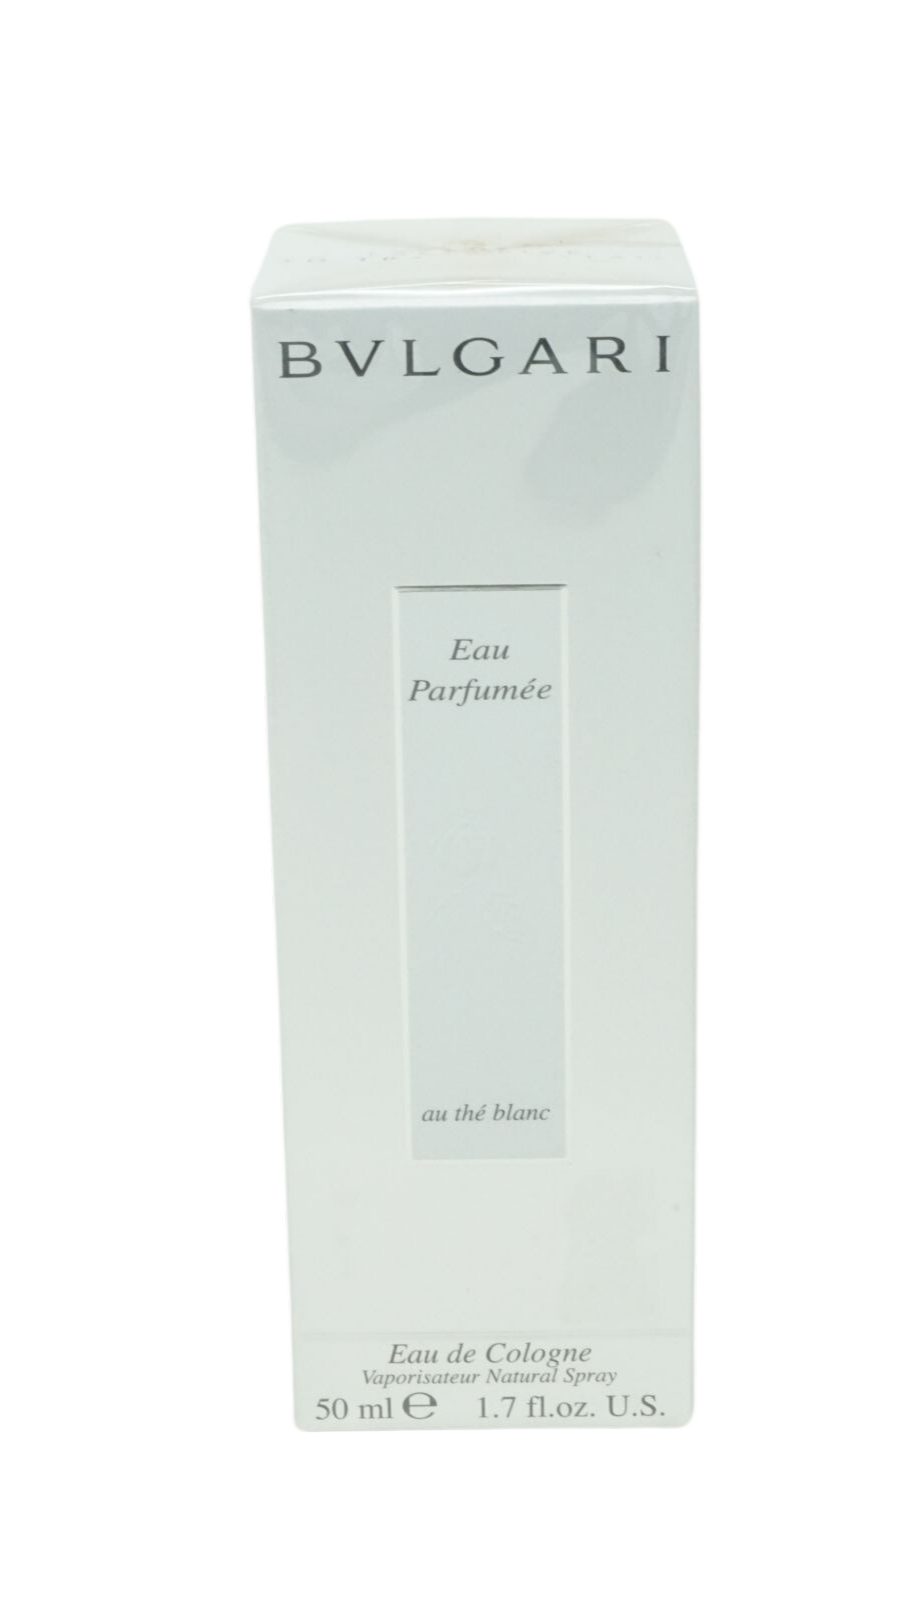 BVLGARI Eau de Cologne BVLGARI EAU Parfumee Au the Blanc Eau de Cologne 50ml